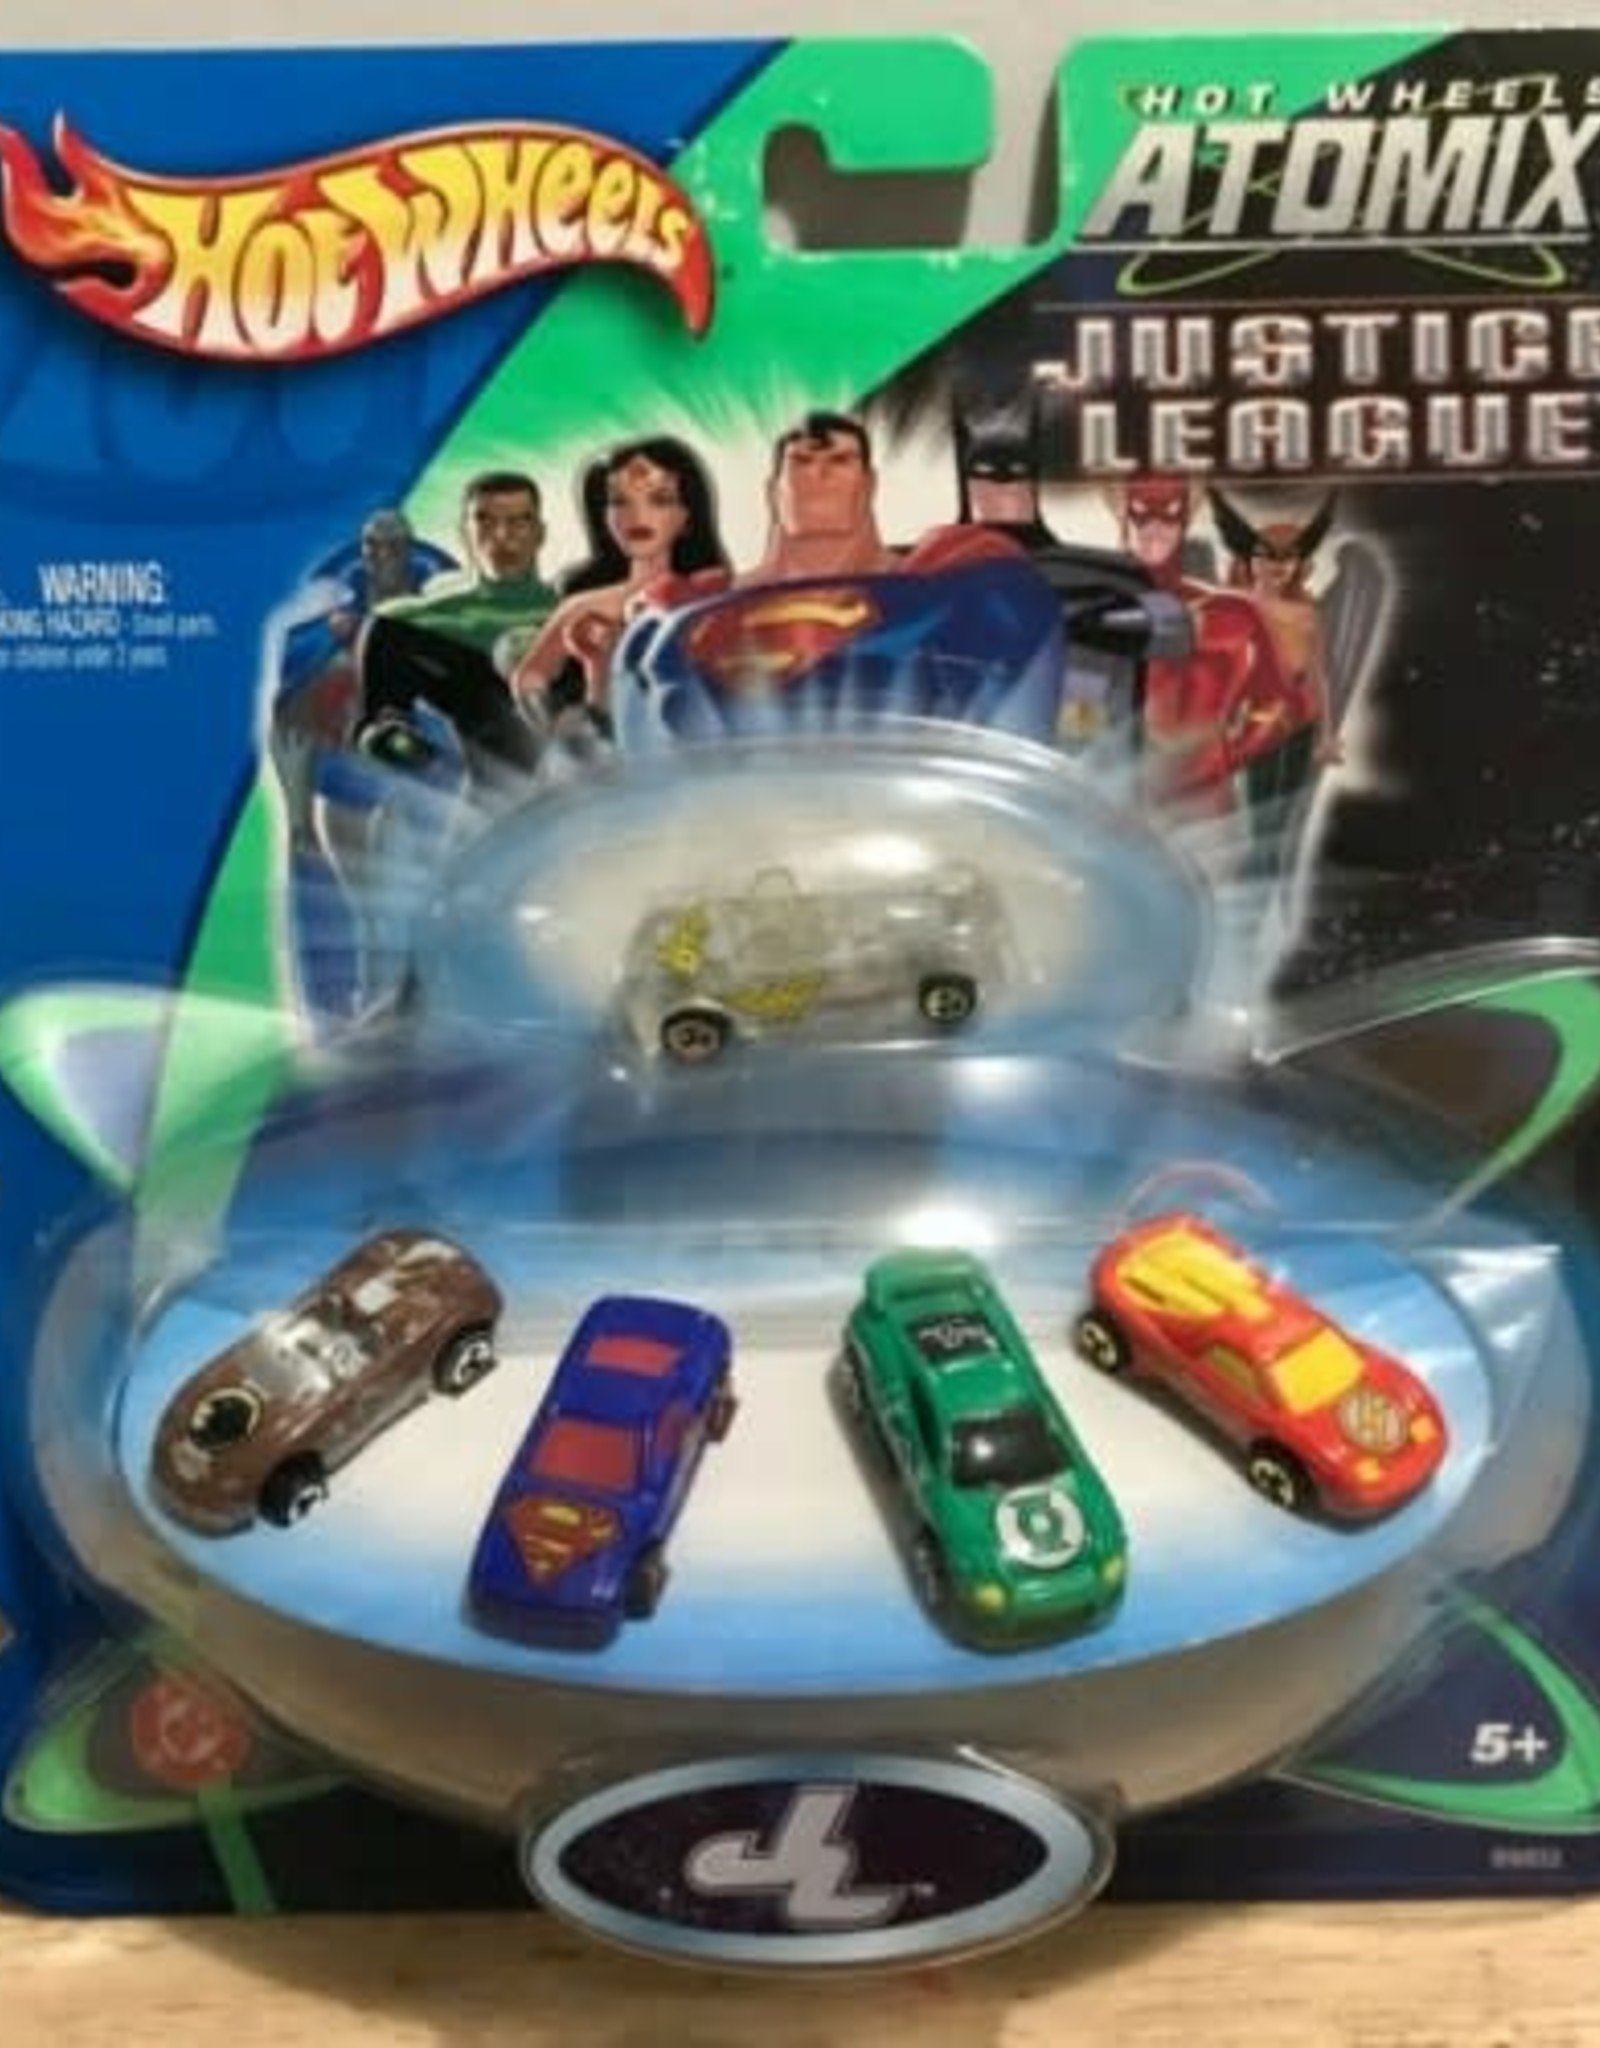 Hot Wheels Hot Wheels Atomix Justice League